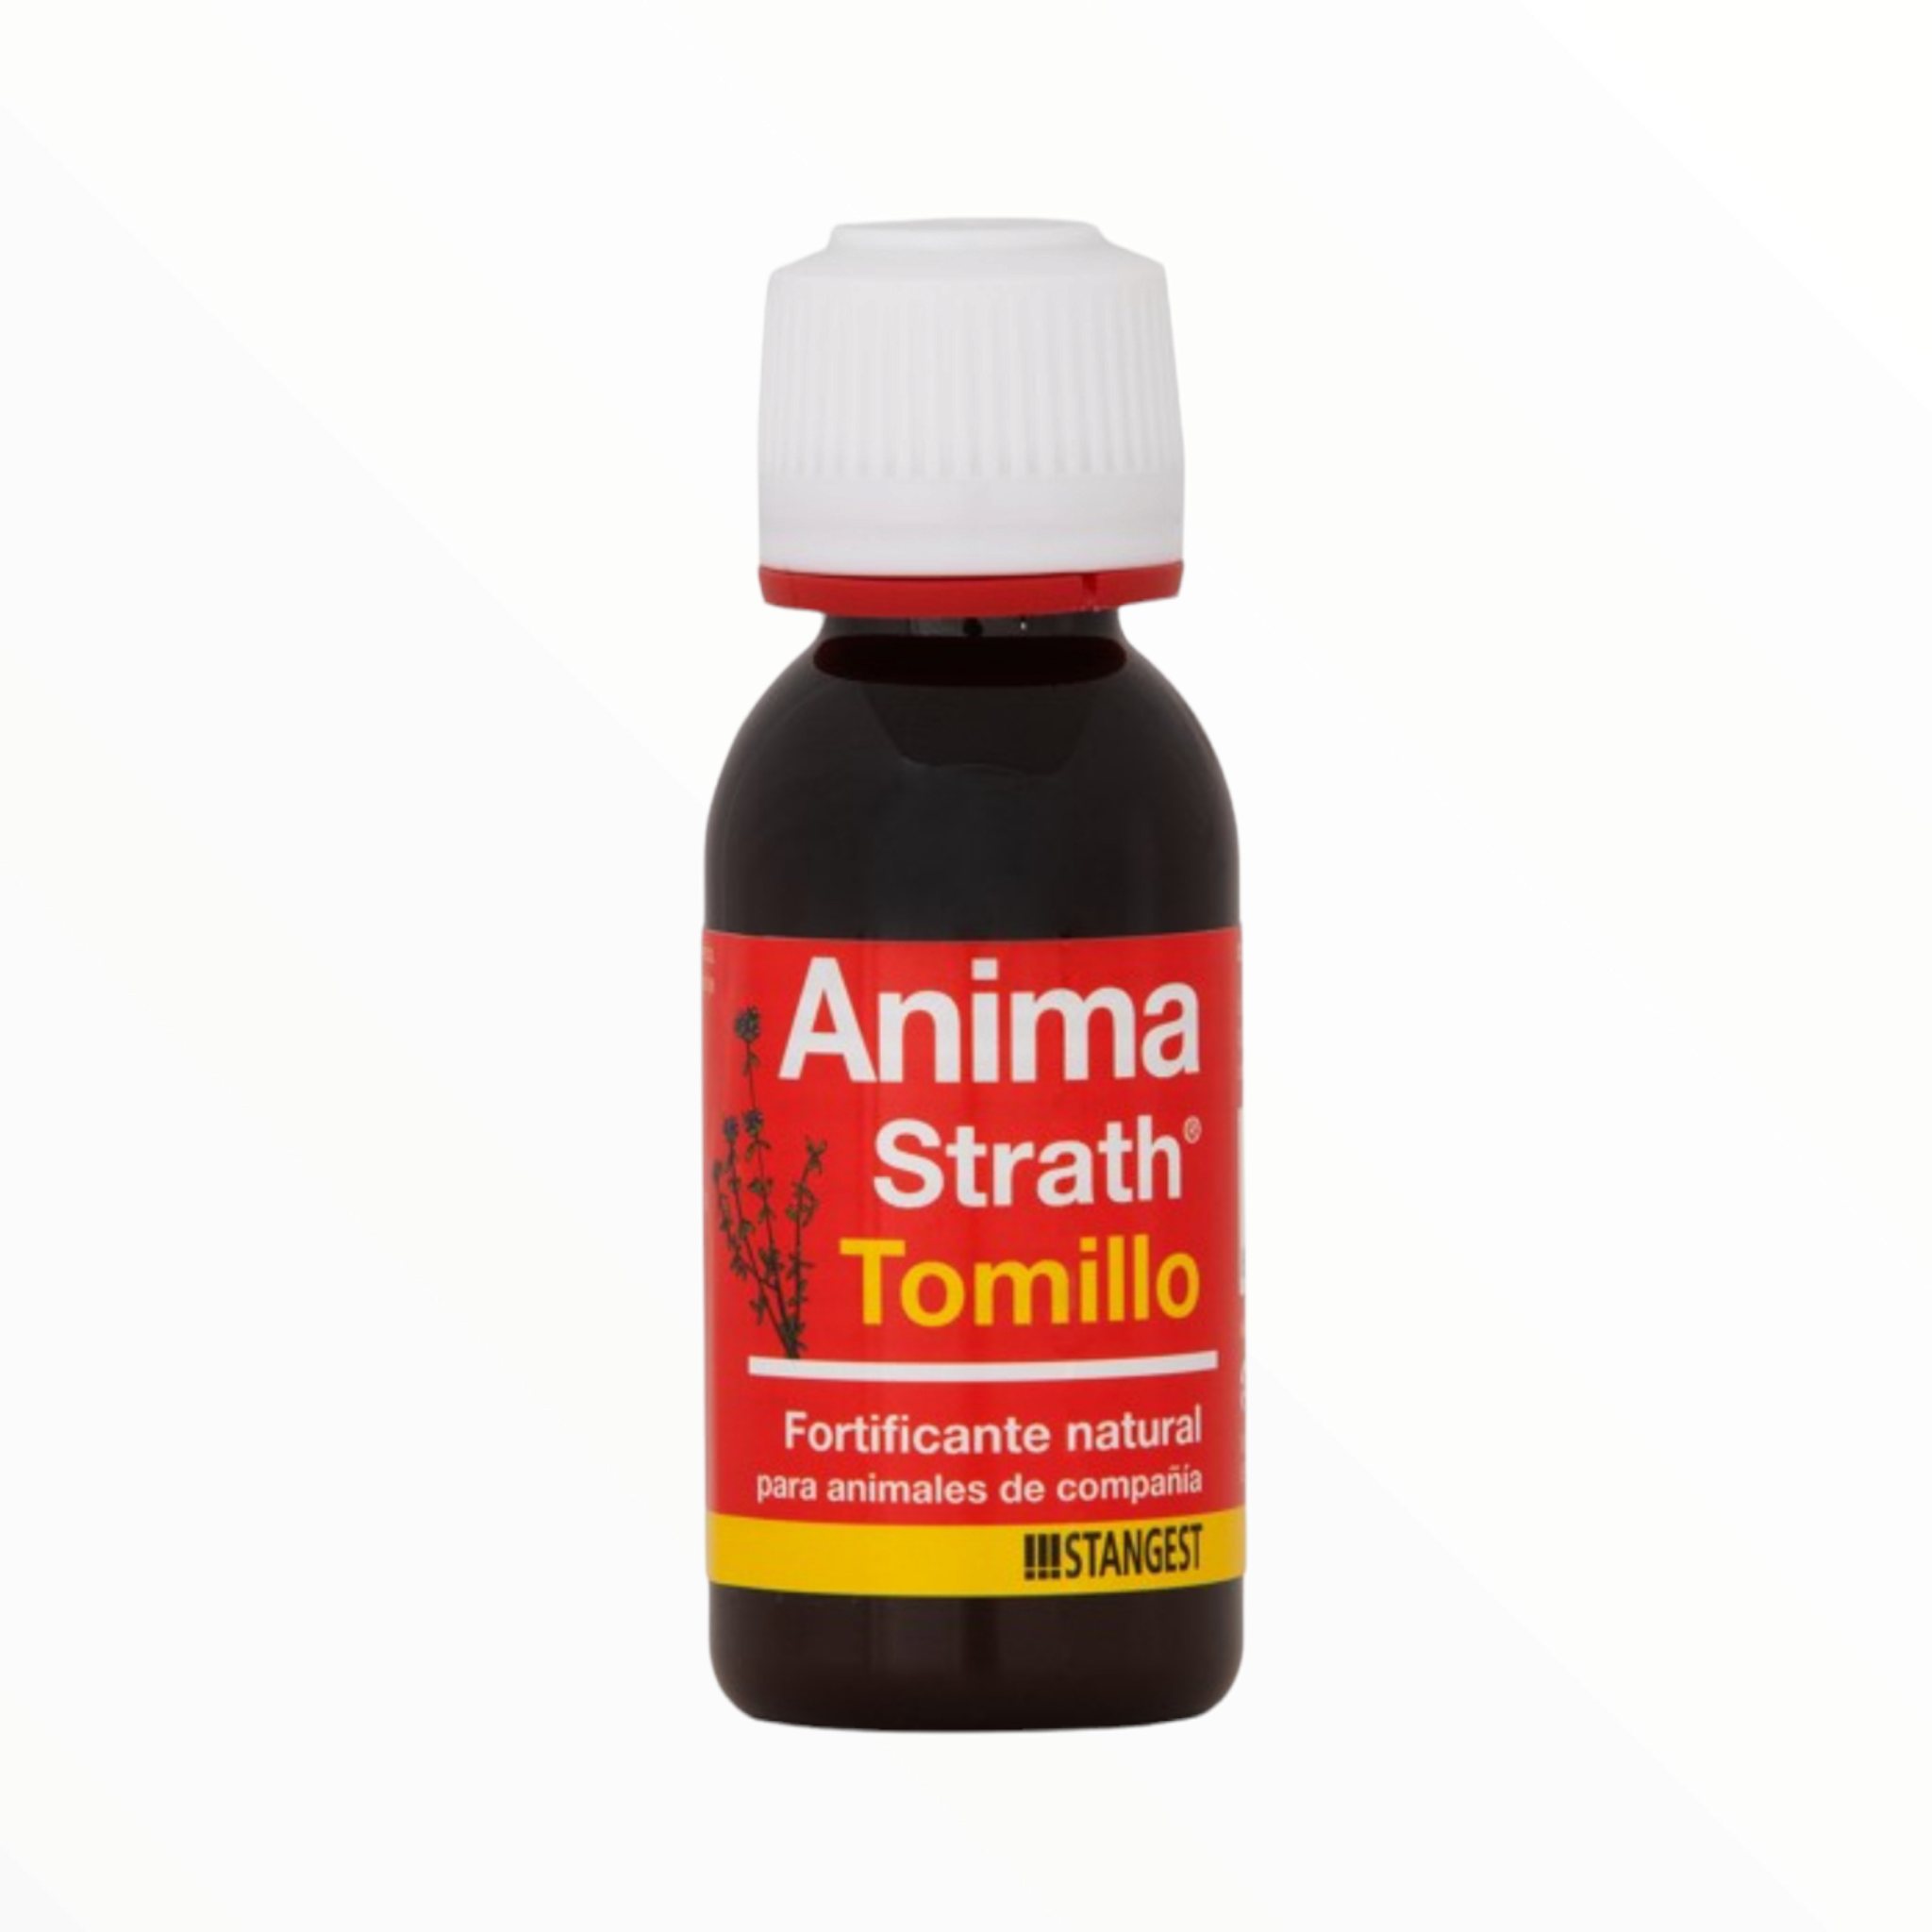 Anima-Strath 100ml